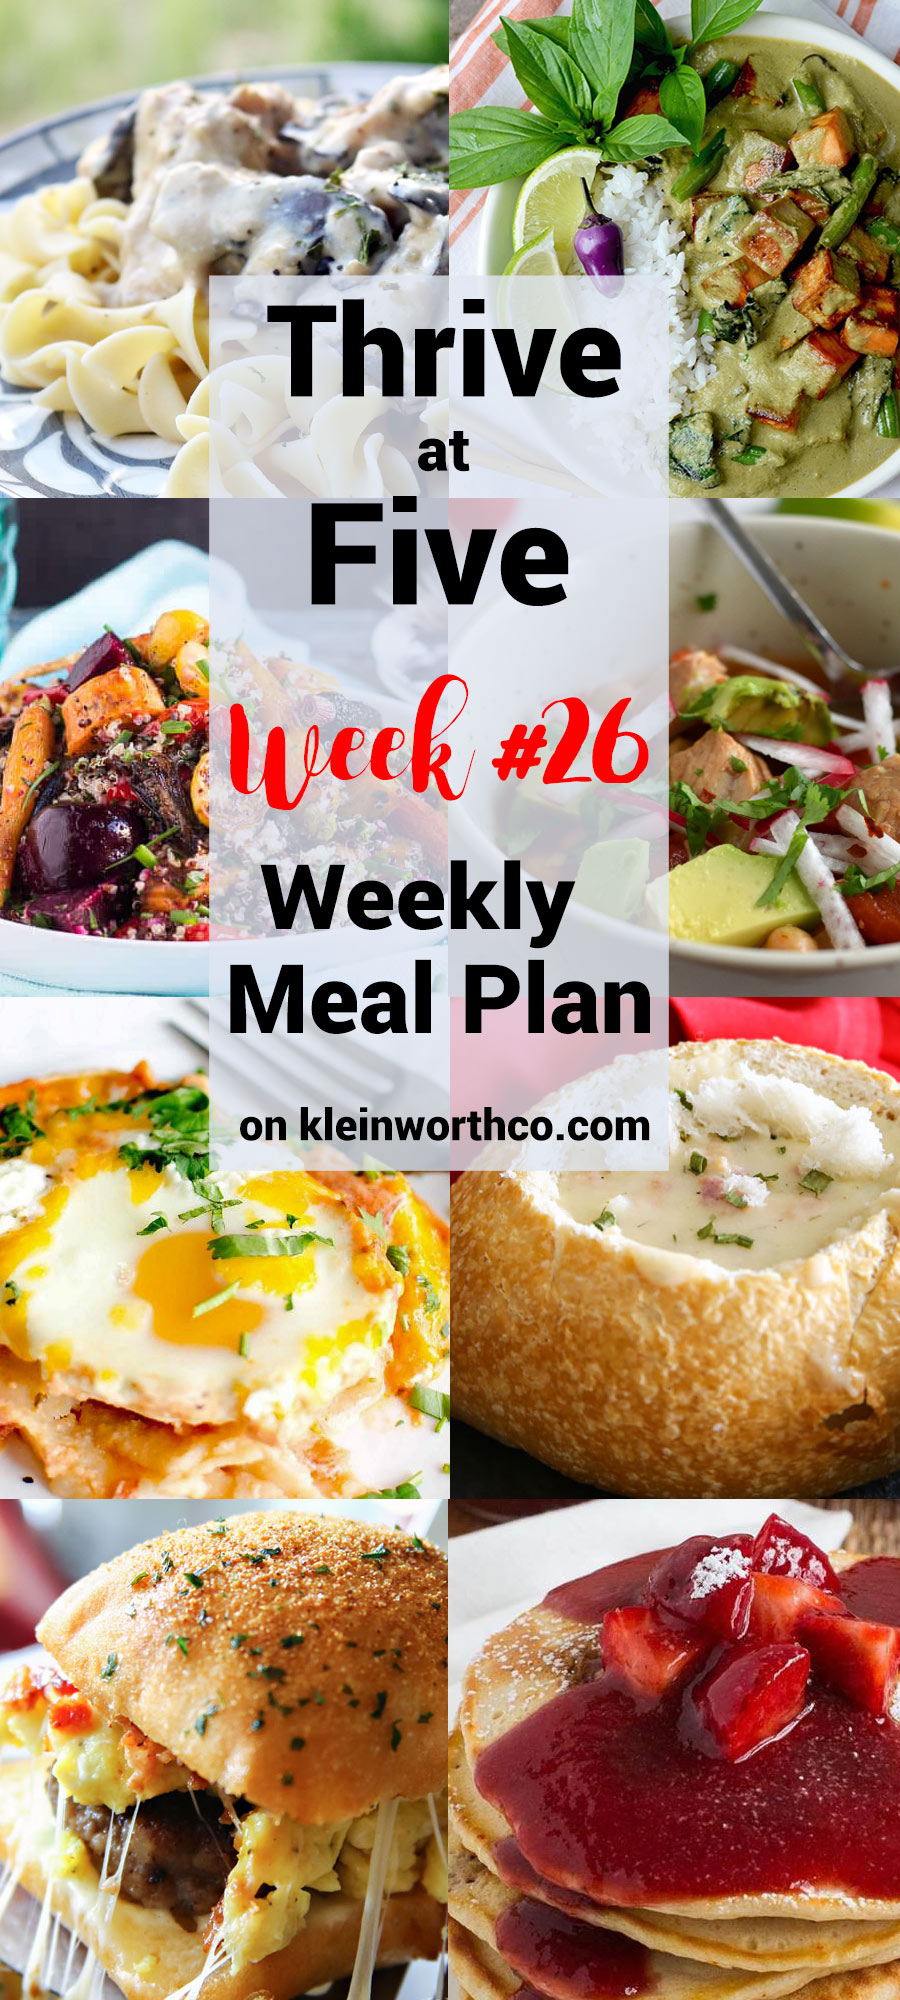 Thrive at Five Meal Plan Week 26